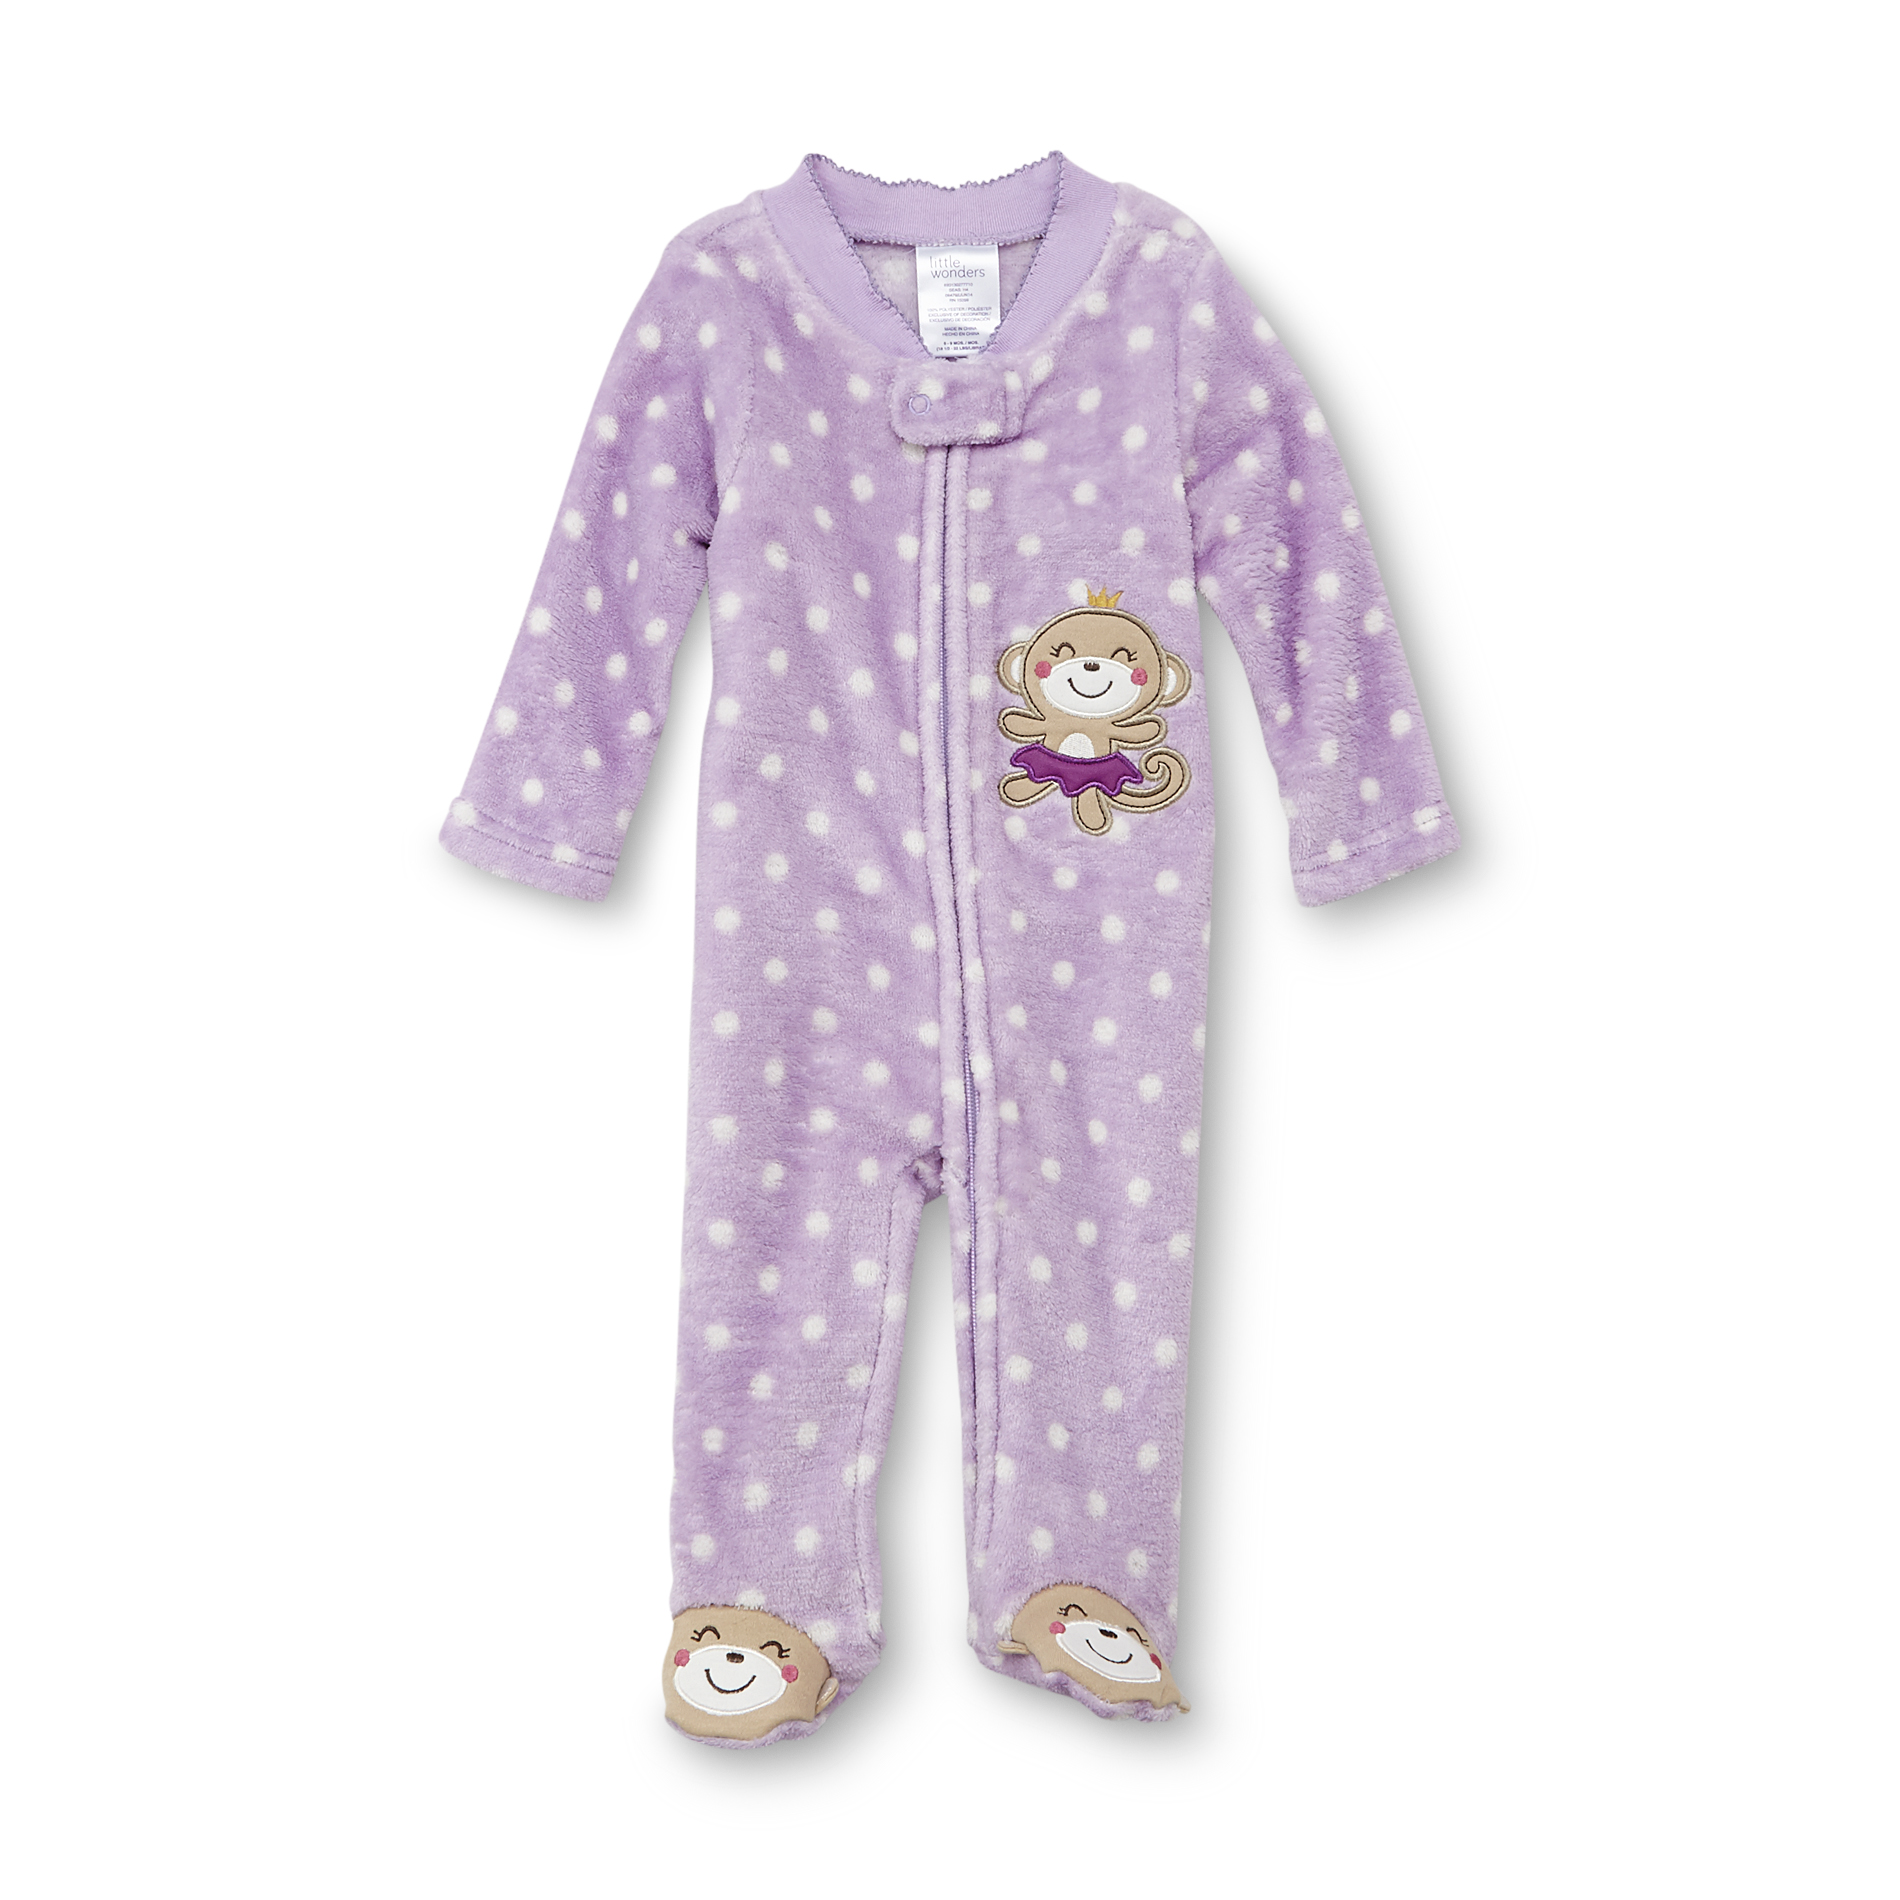 Little Wonders Newborn Girl's Footed Sleeper Pajamas - Polka Dot